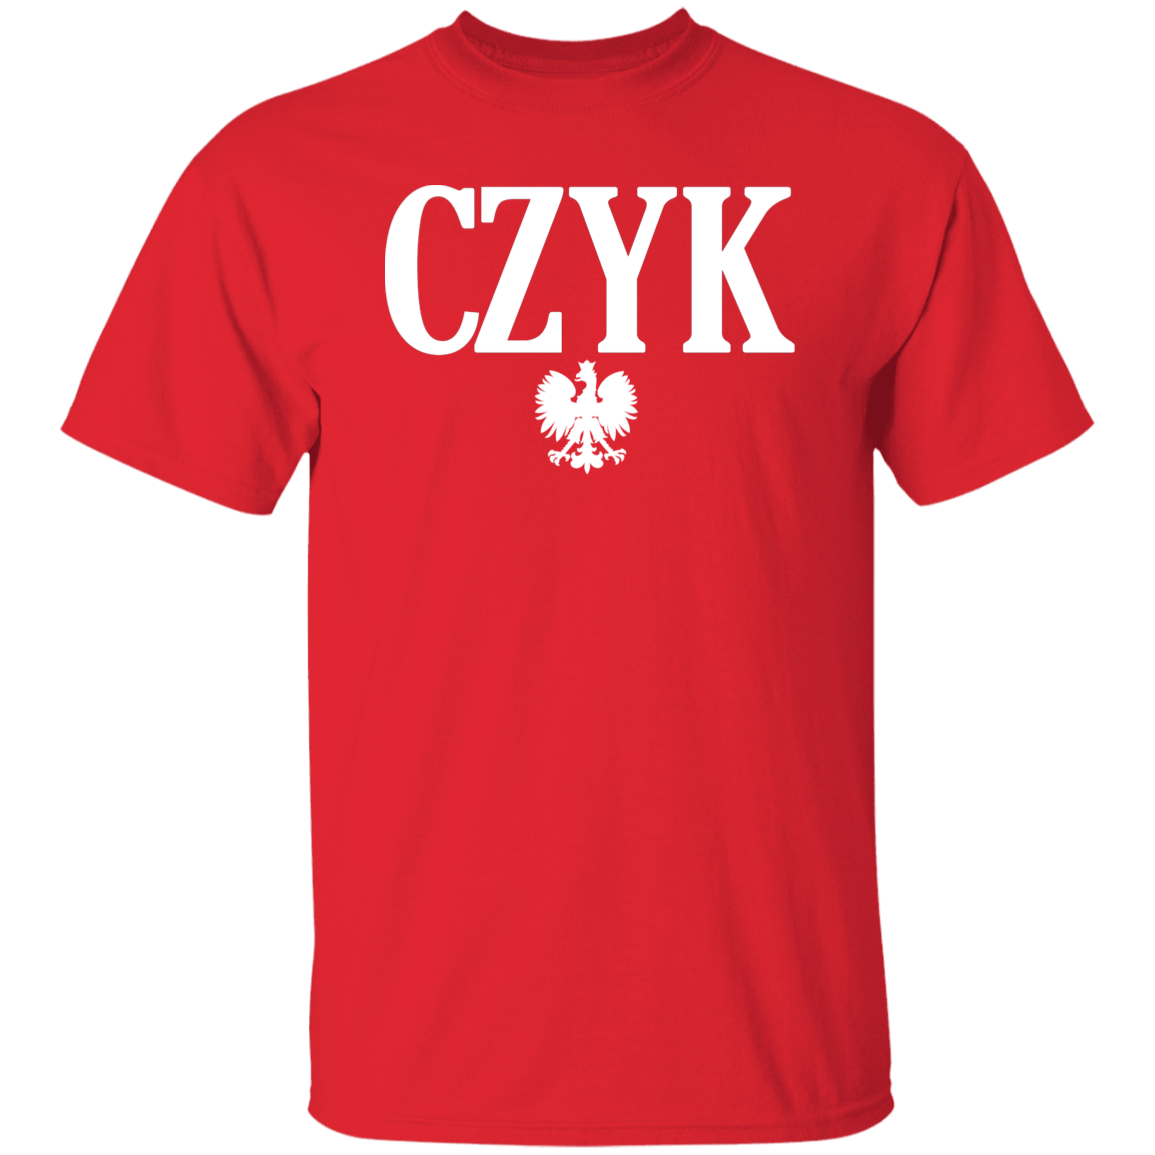 CZYK Polish Surname Ending Apparel CustomCat G500 5.3 oz. T-Shirt Red S